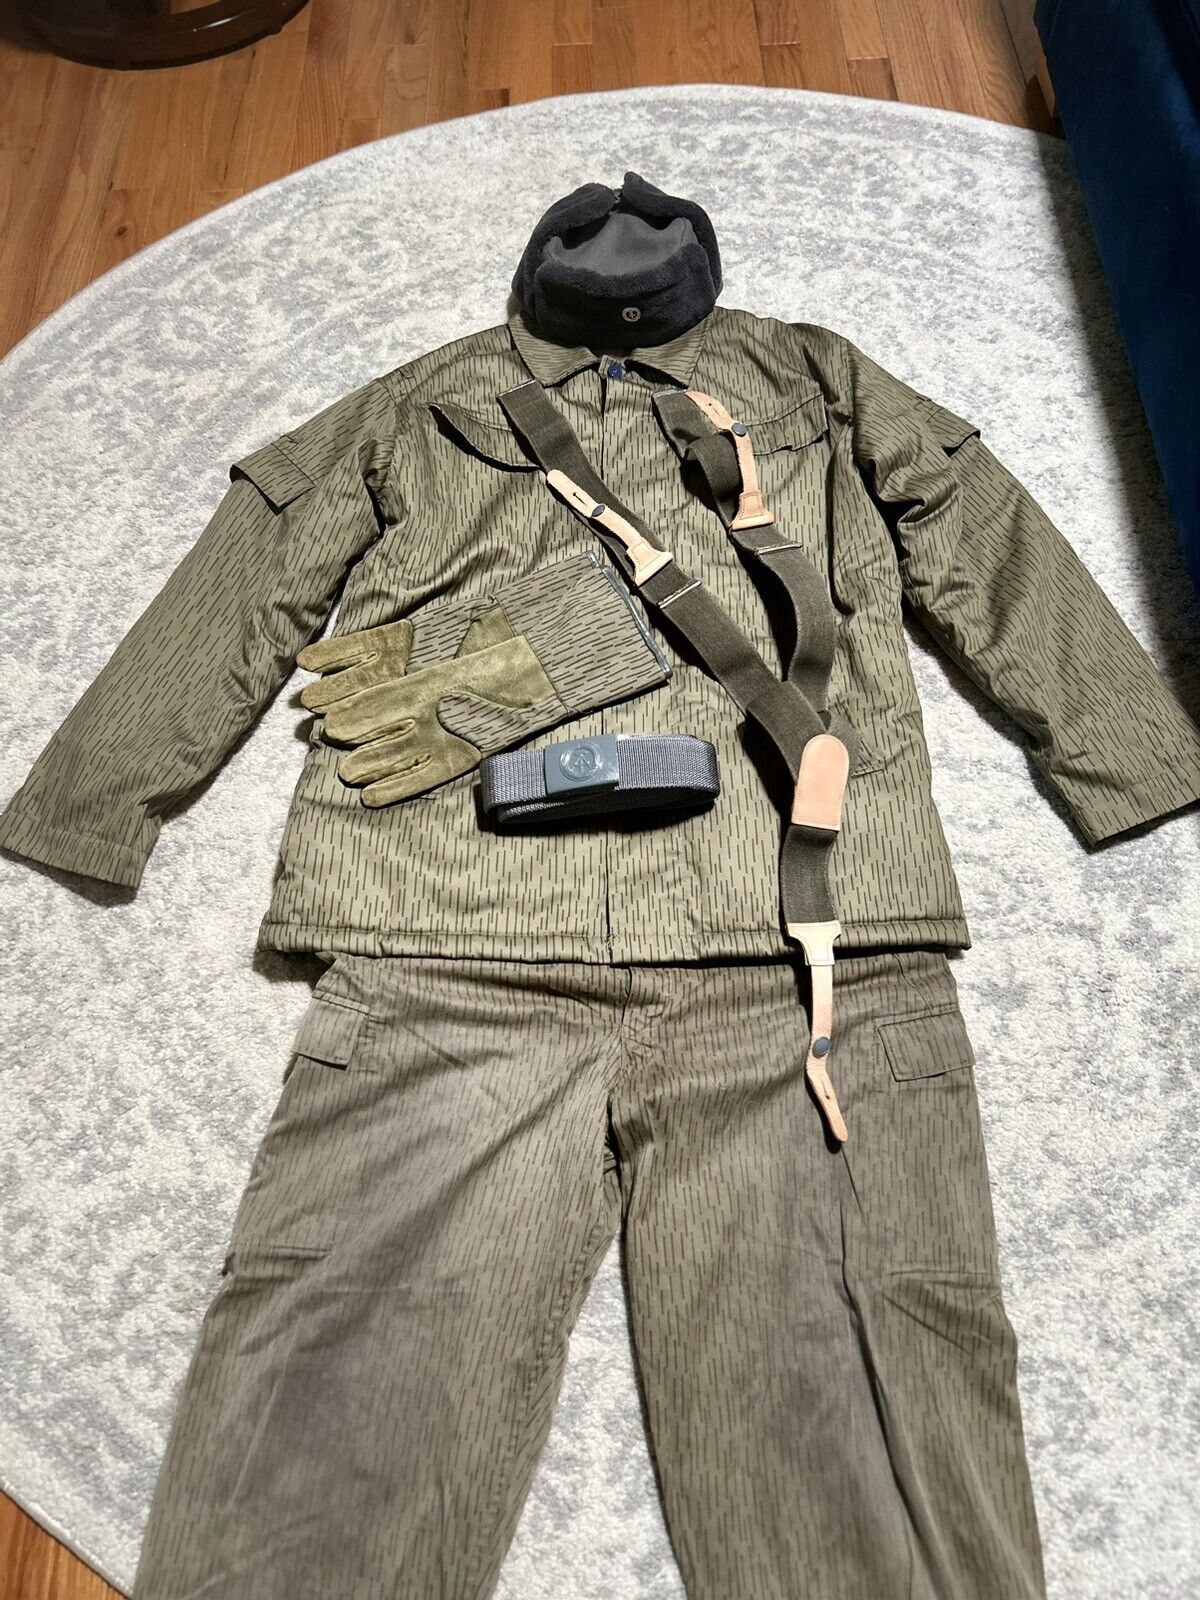 East German NVA Military Winter Uniform Lot Jacket Pants Hat Suspenders Belt DDR